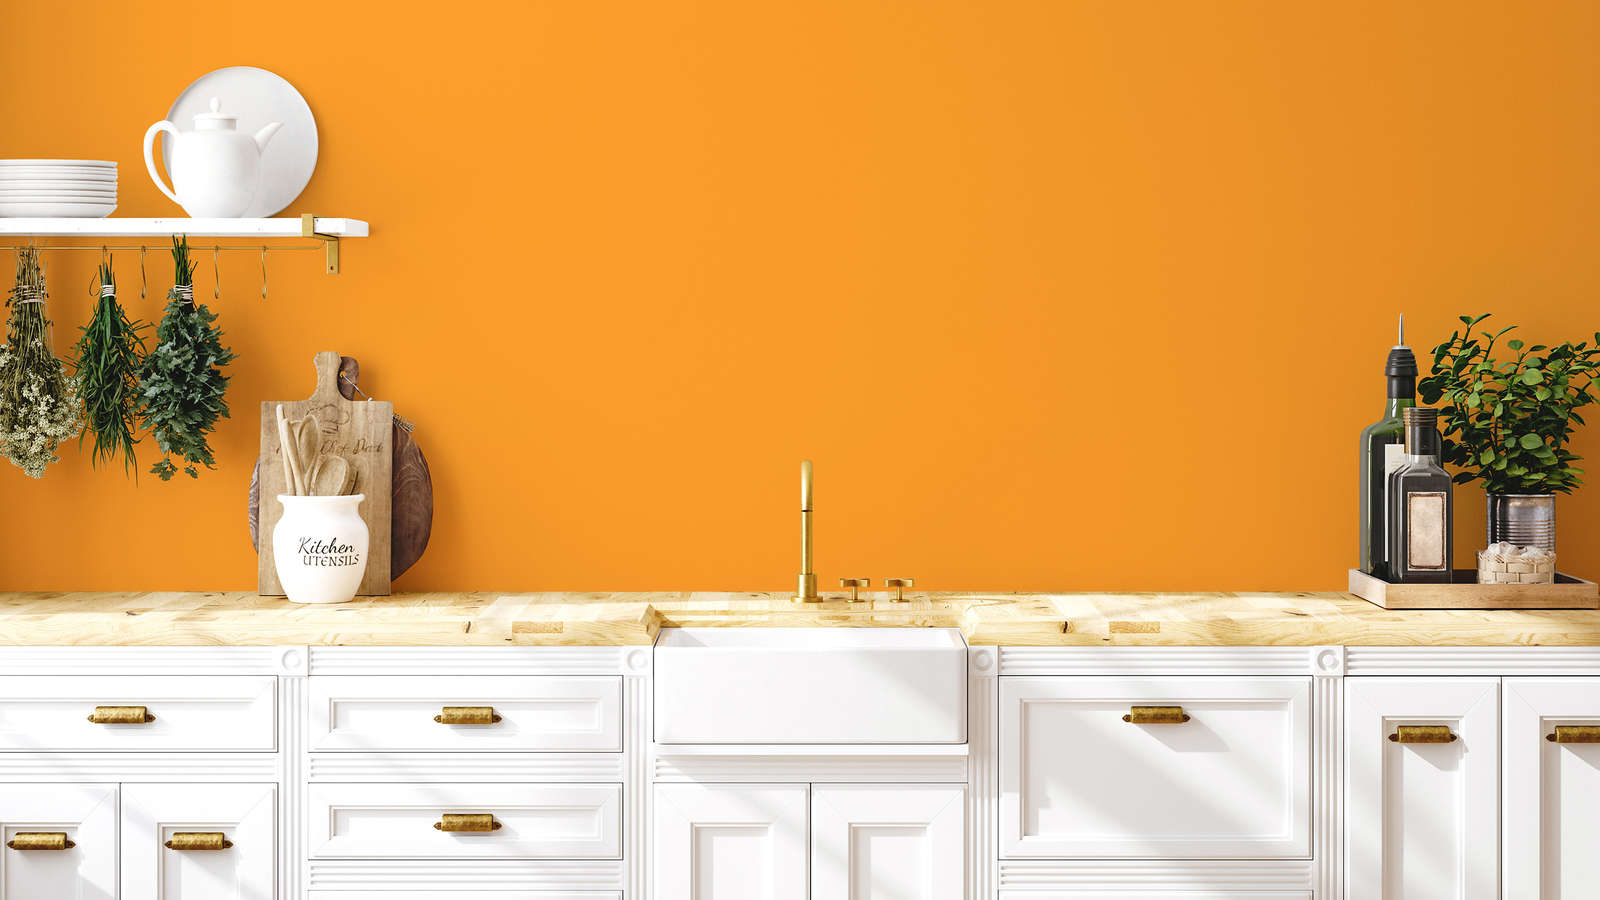             Pittura murale Premium Giallo miele allegro »Juicy Yellow« NW807 – 5 litri
        